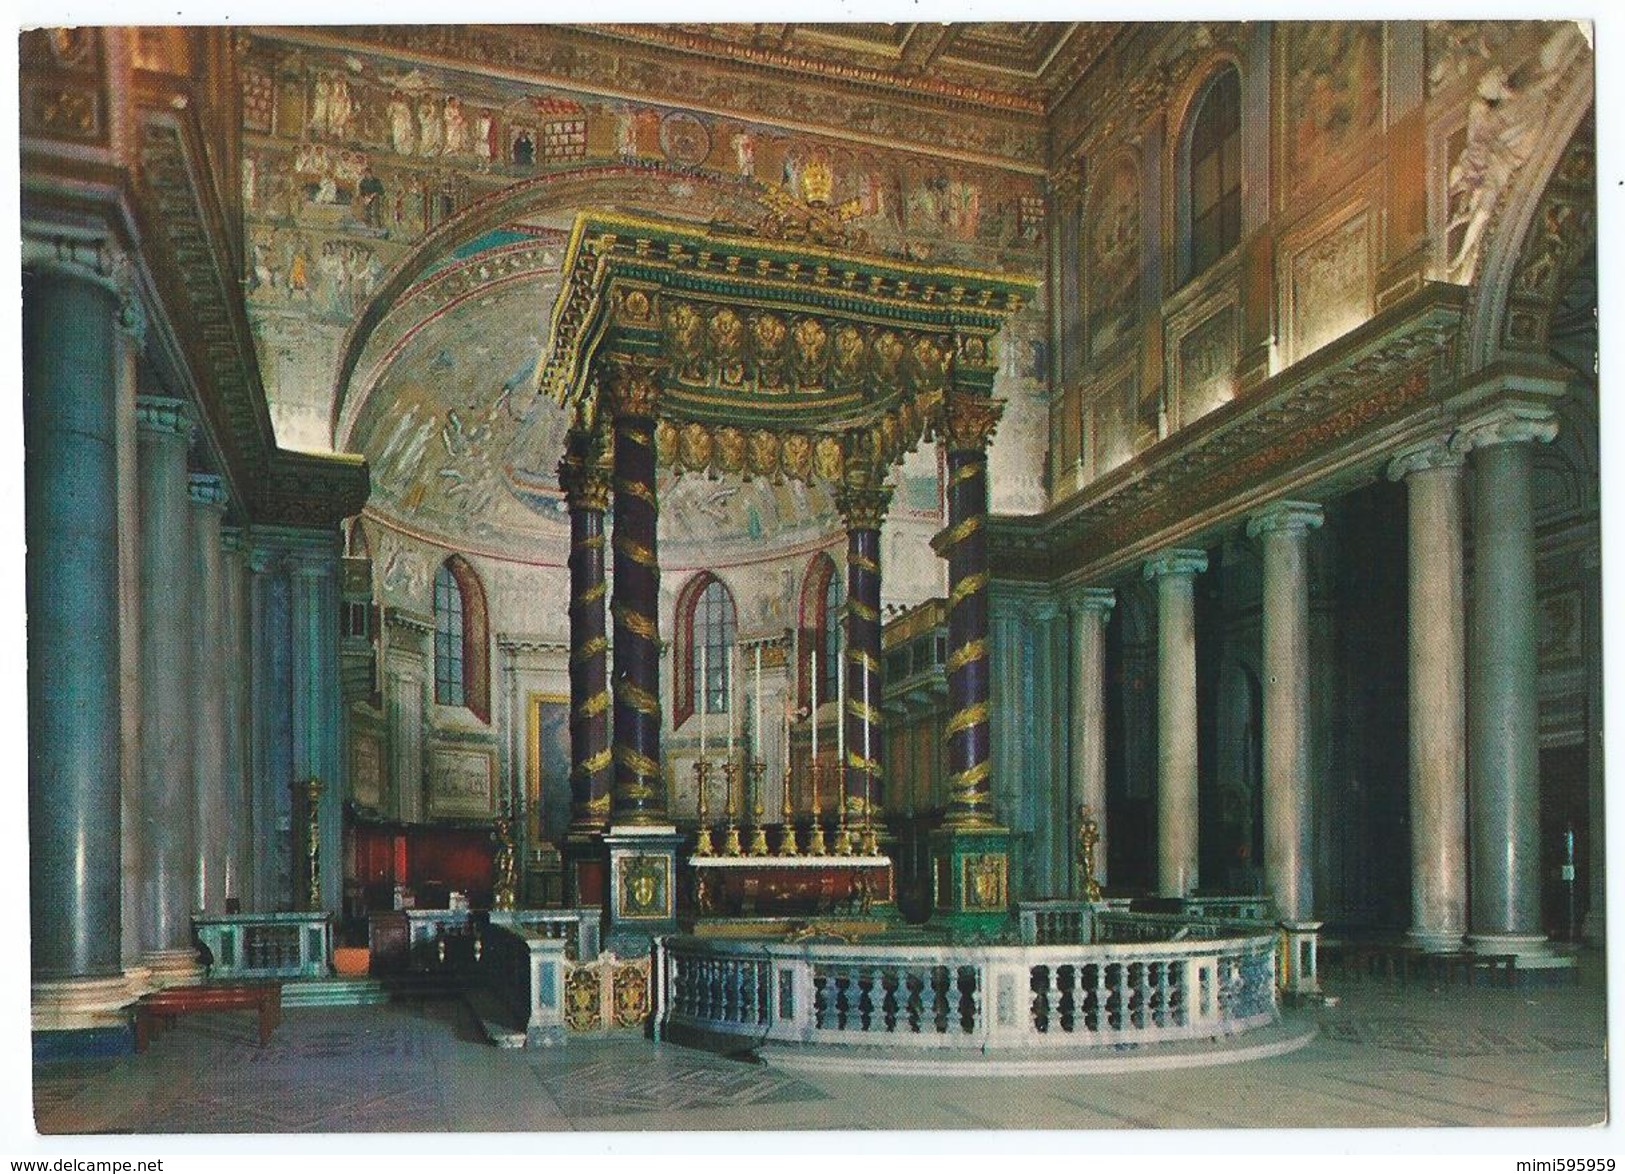 ROME / ROMA -Basilica Di Santa Maria Maggiore -Interno / Basilique De Sainte-Marie Majeure -Non écrite -Scan Recto-verso - Churches